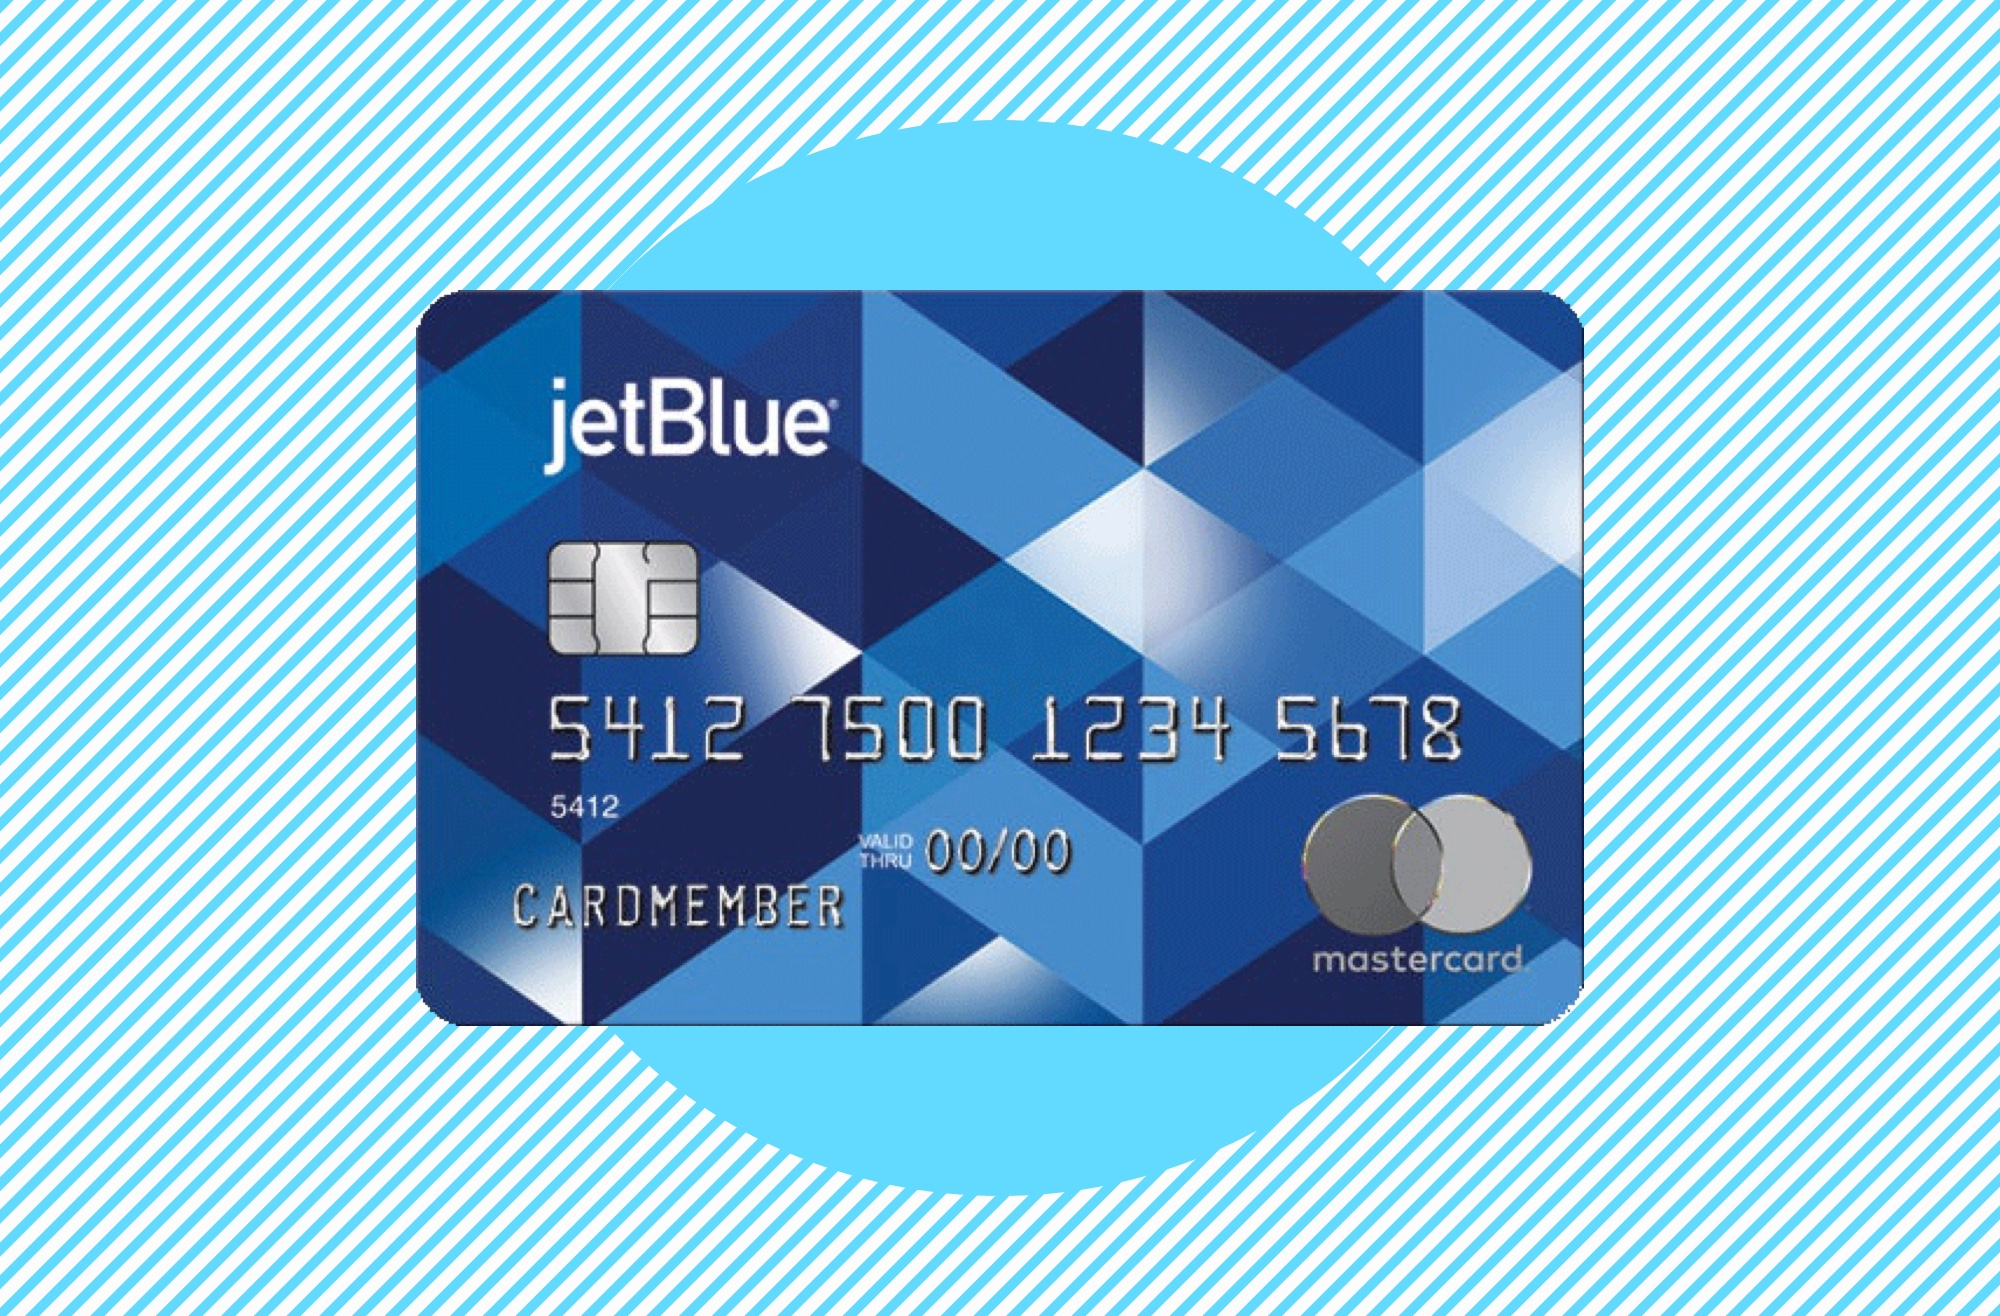 JetBlue Plus Card full review